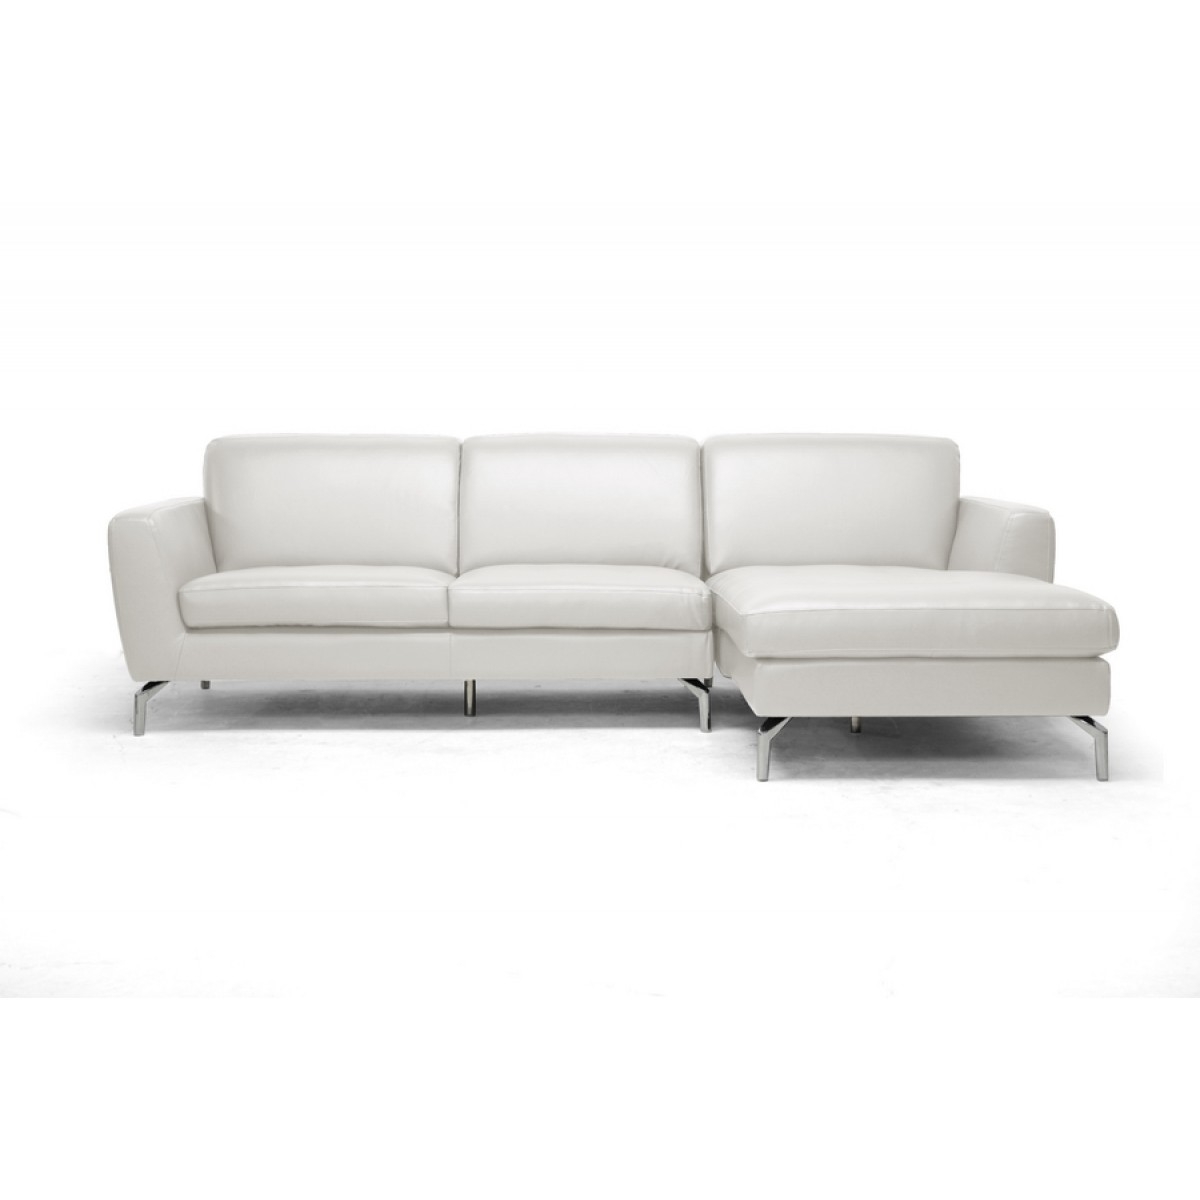 Donovan Leather Modern Sectional Sofa